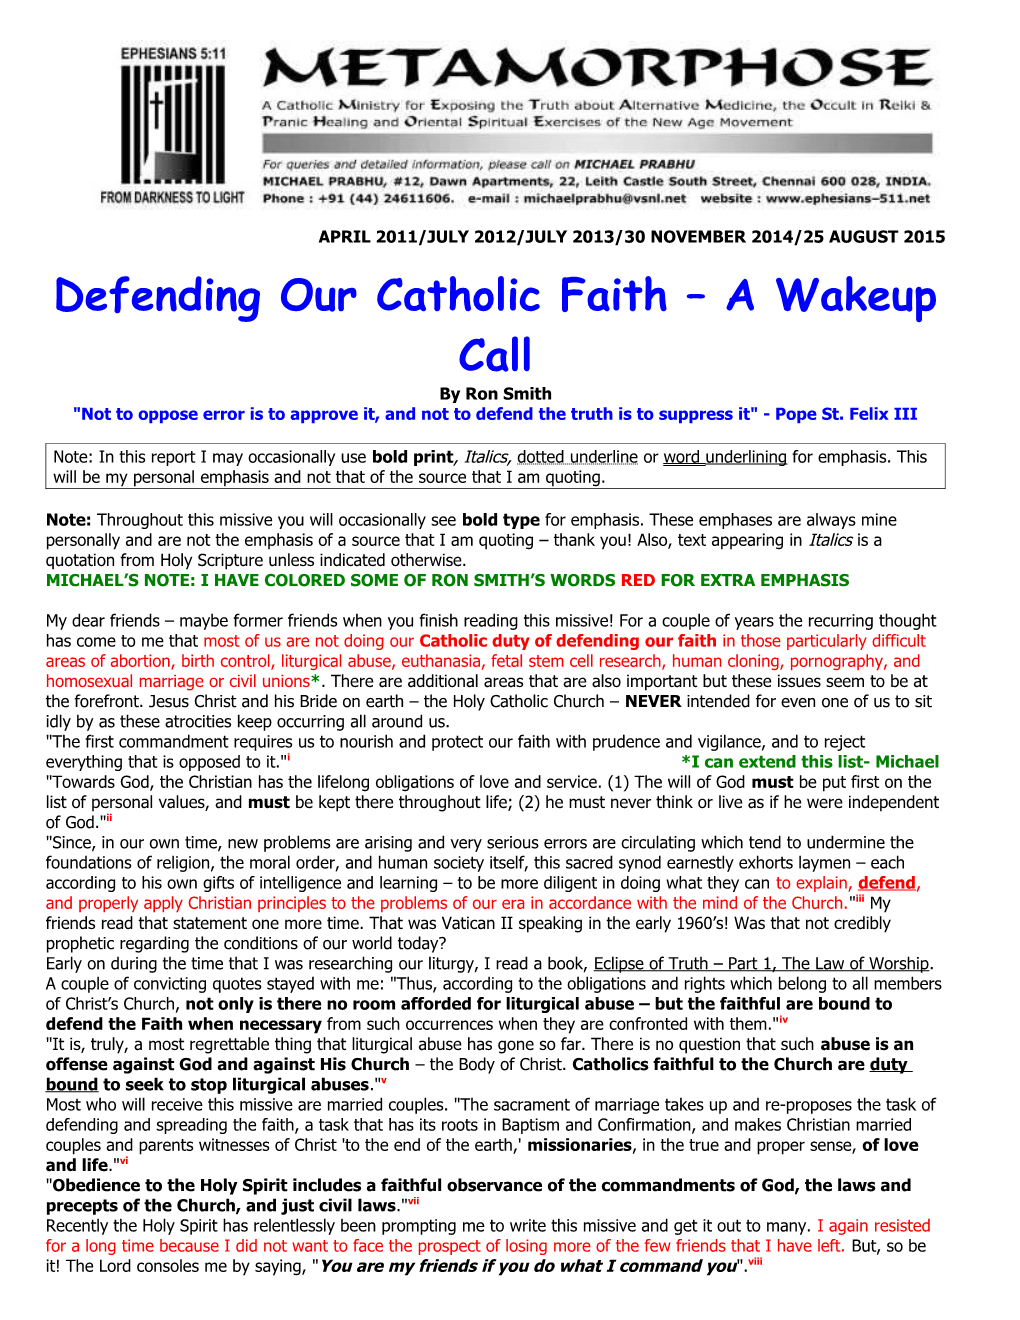 Defending Our Catholic Faith a Wakeup Call